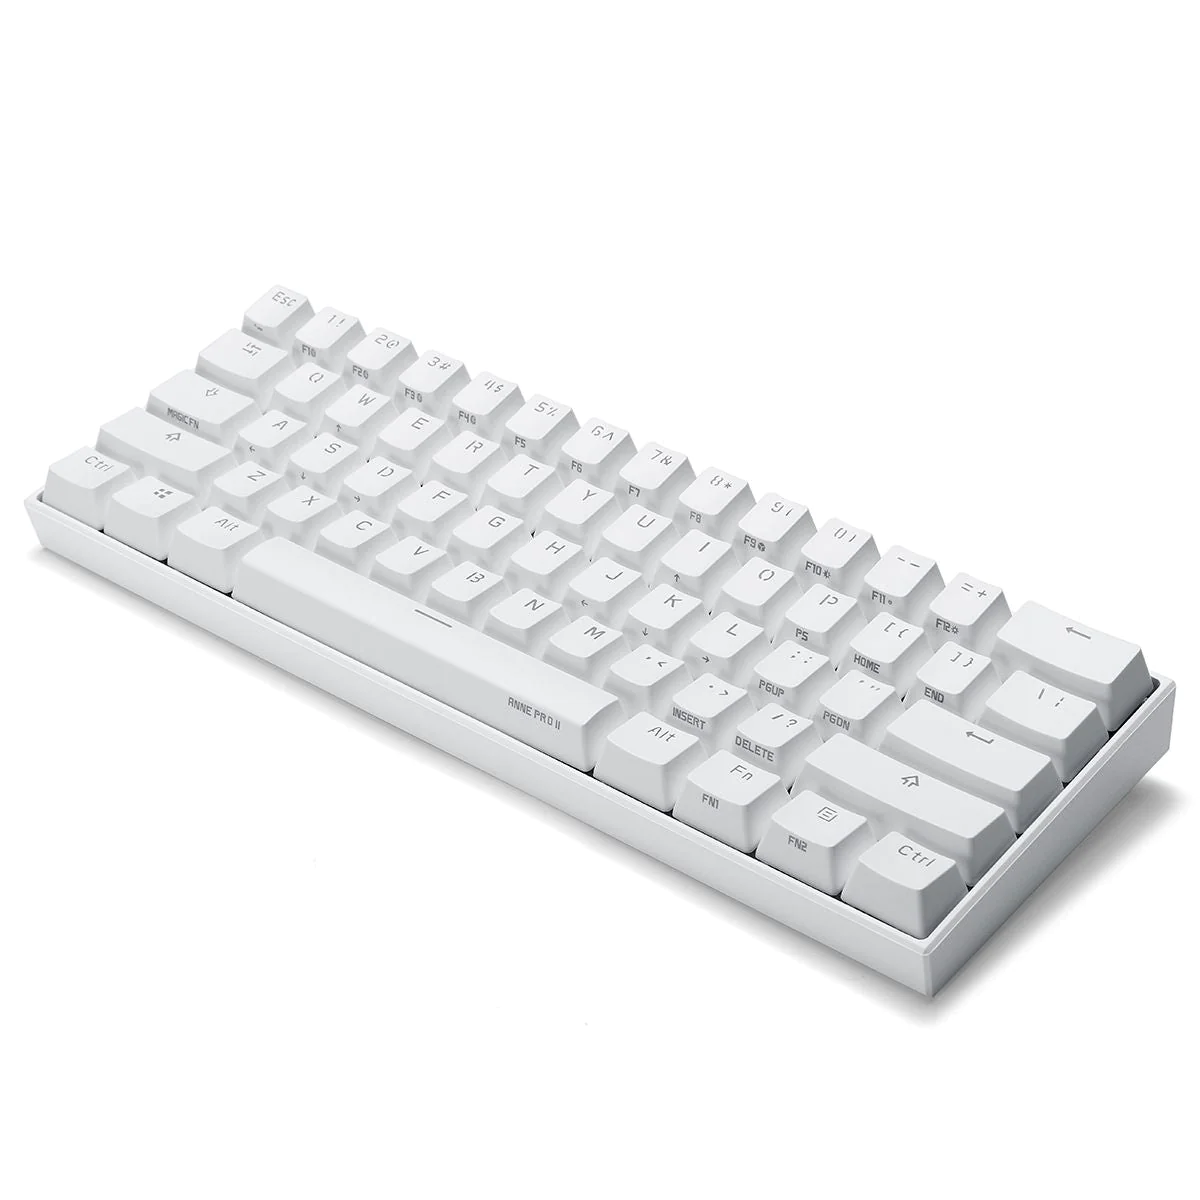 ANNE PRO 2, 60% Mechanical Keyboard, Gateron Brown Switch